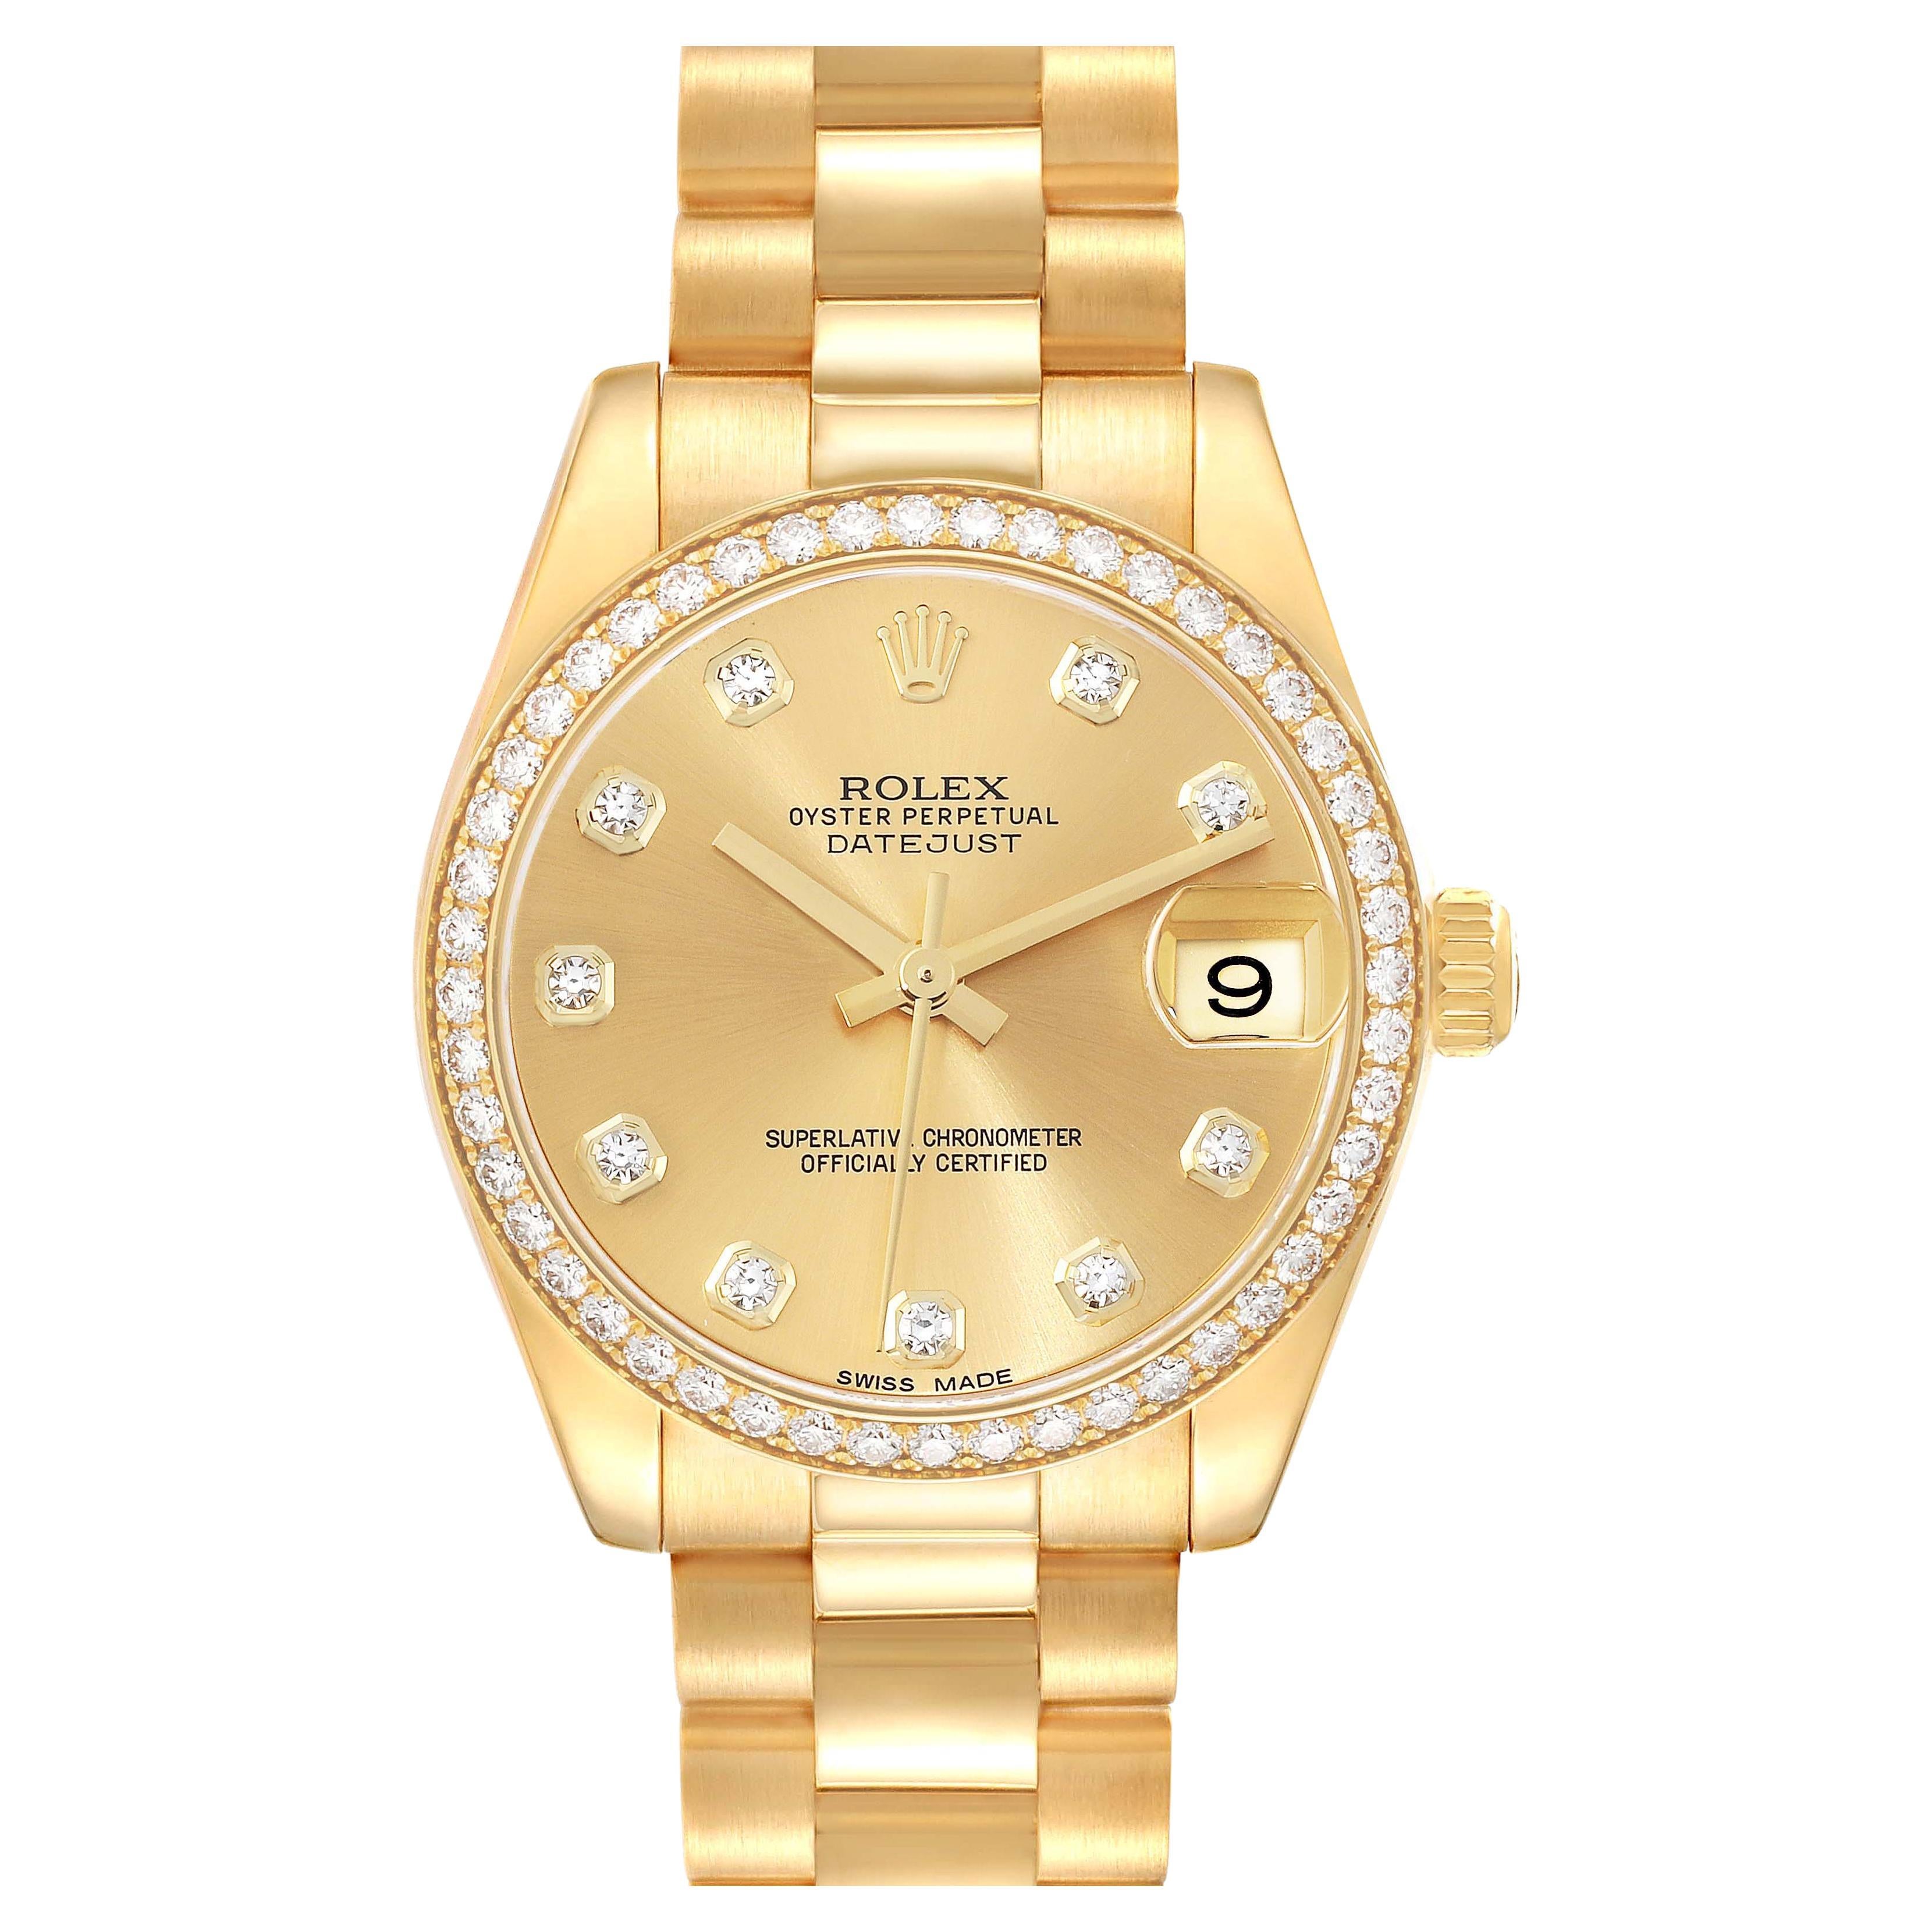 Rolex President 31 Midsize Yellow Gold Diamond Ladies Watch 178288 Box Card